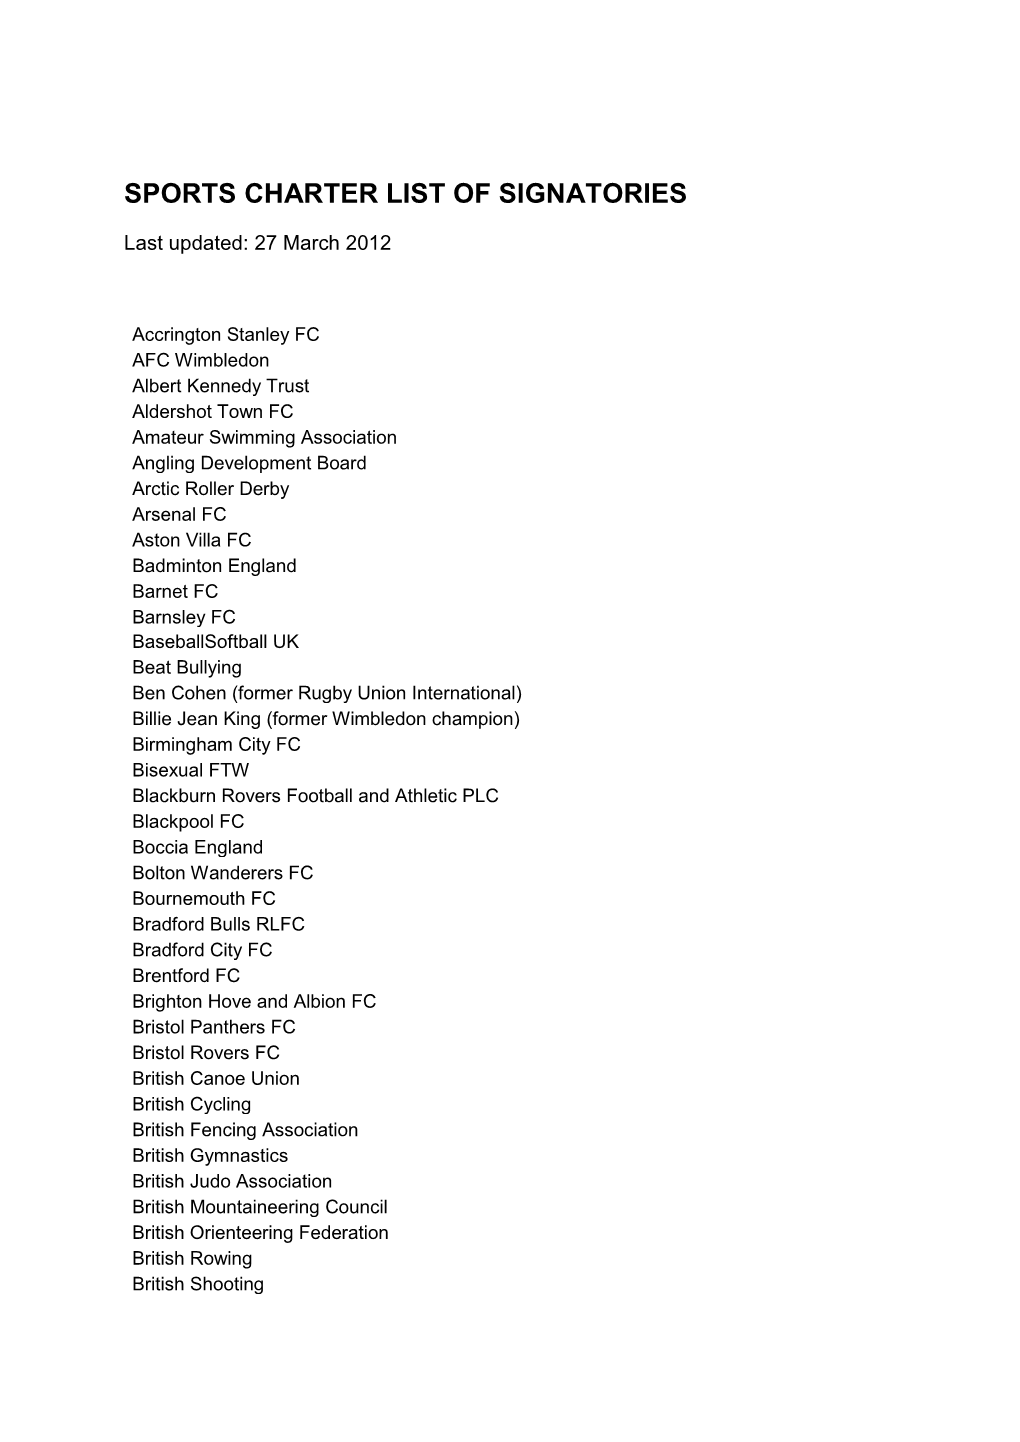 Sports Charter List of Signatories